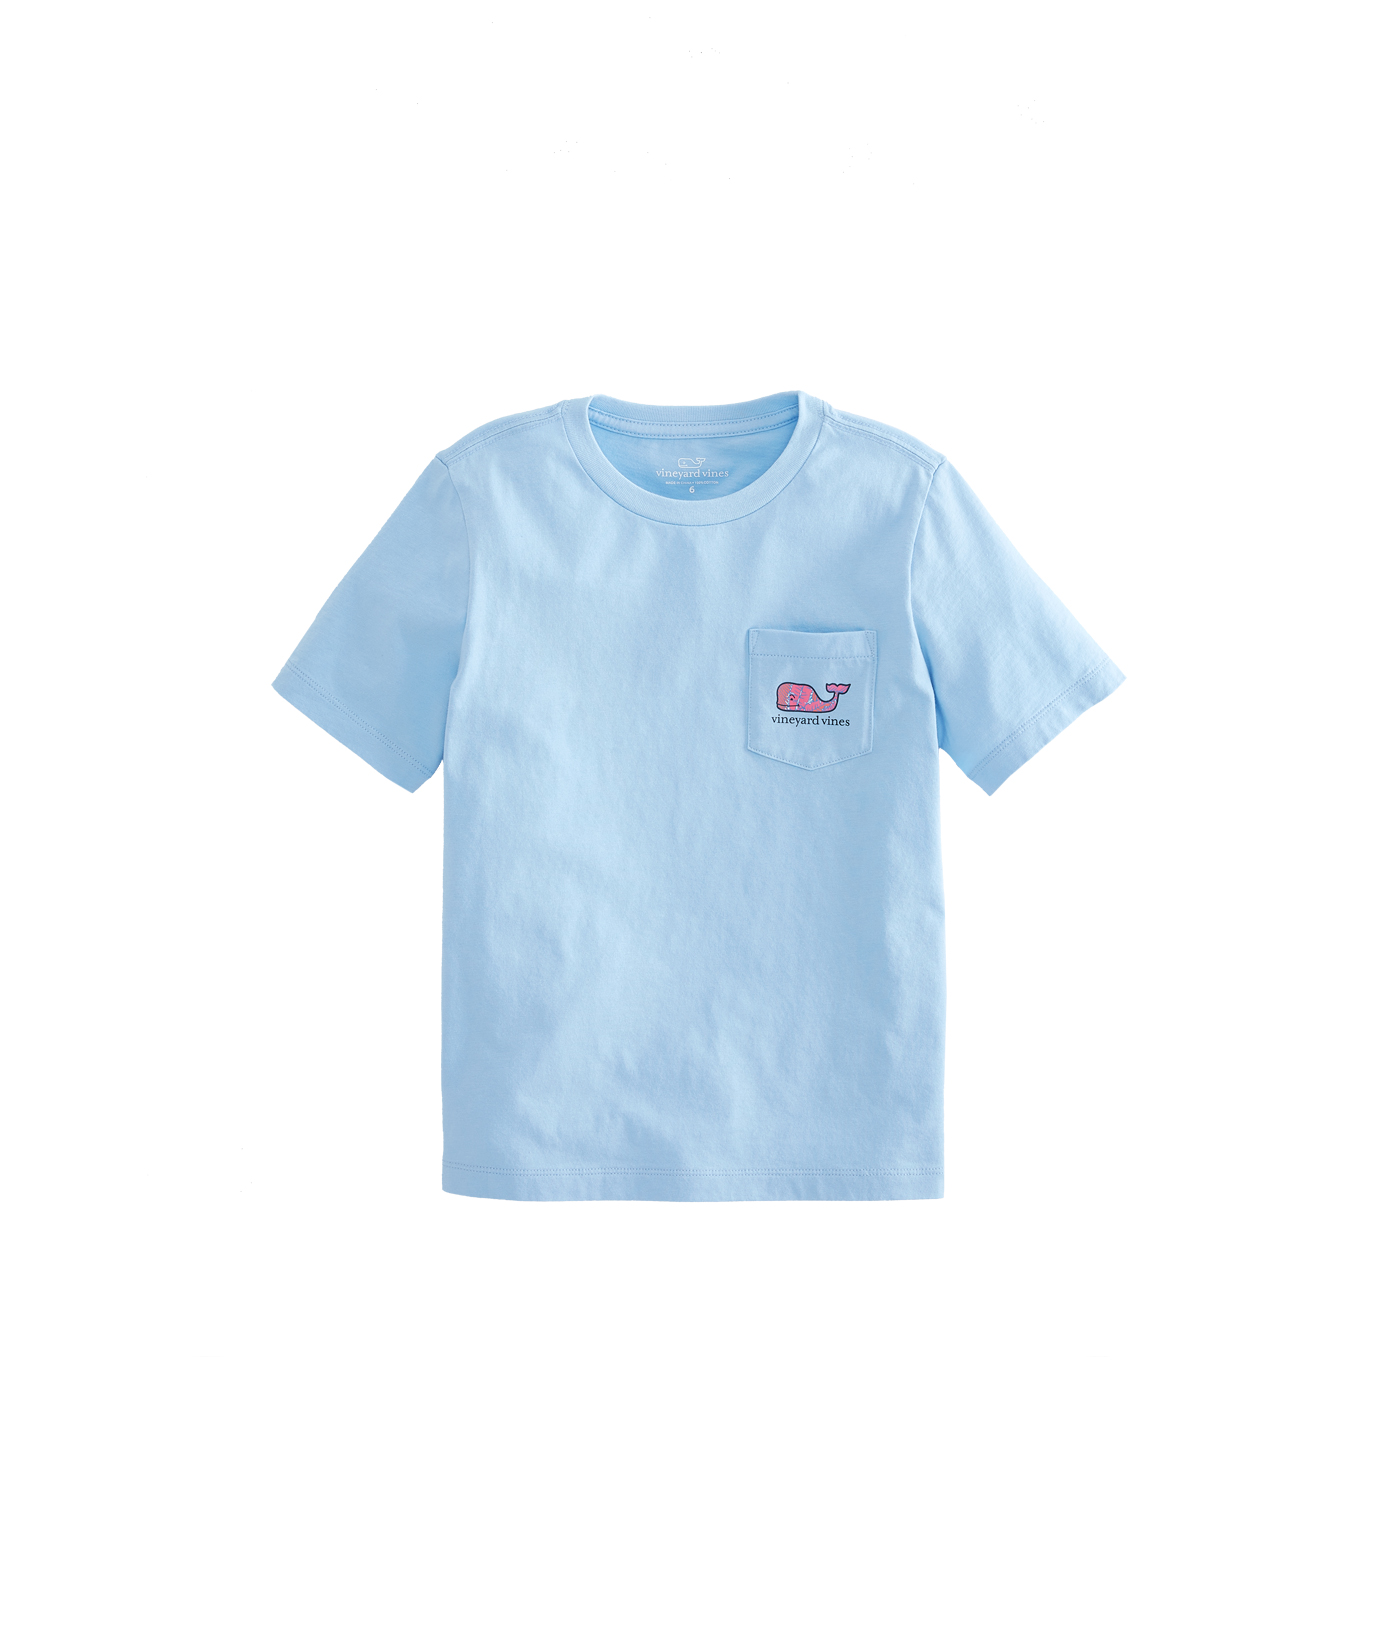 Shop Boys Island Palm Whale Fill T-Shirt at vineyard vines